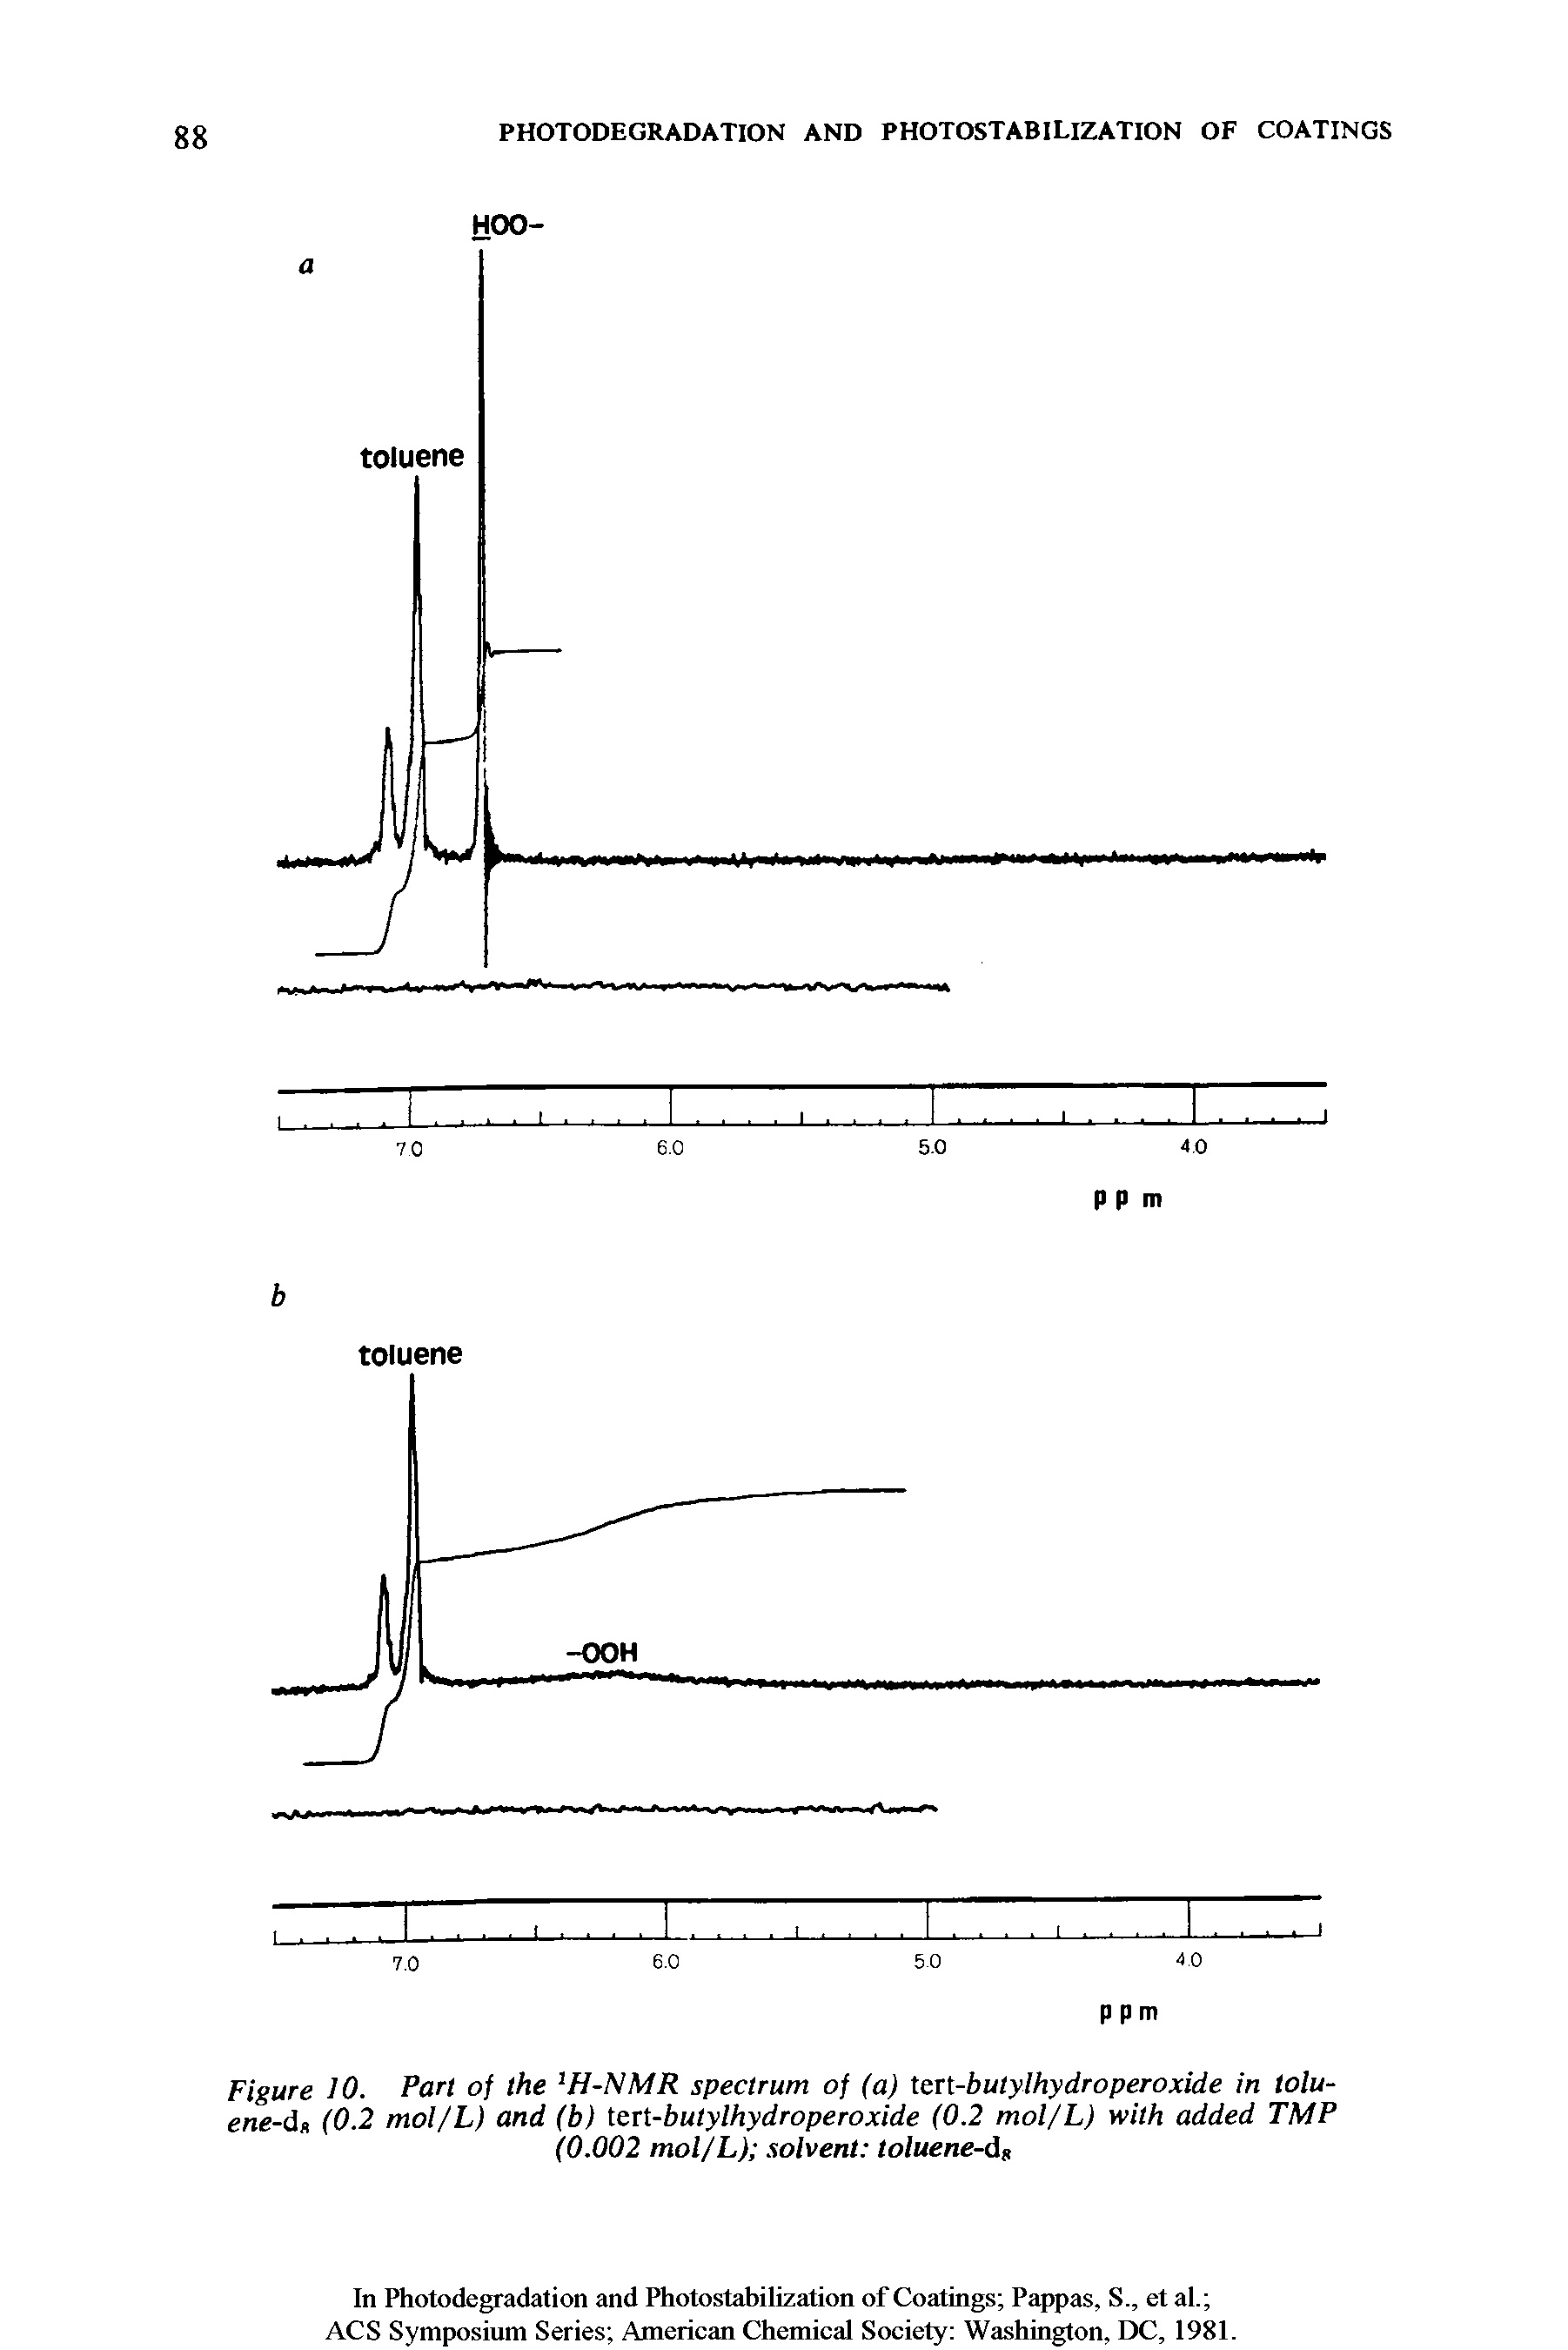 Figure 10. Part of the 1H-NMR spectrum of (a) tcrt-butylhydroperoxide in tolu-ene-dn (0.2 mol/L) and (b) tert-butylhydroperoxide (0.2 mol/L) with added TMP (0.002 mol/L) solvent toluene-ds...